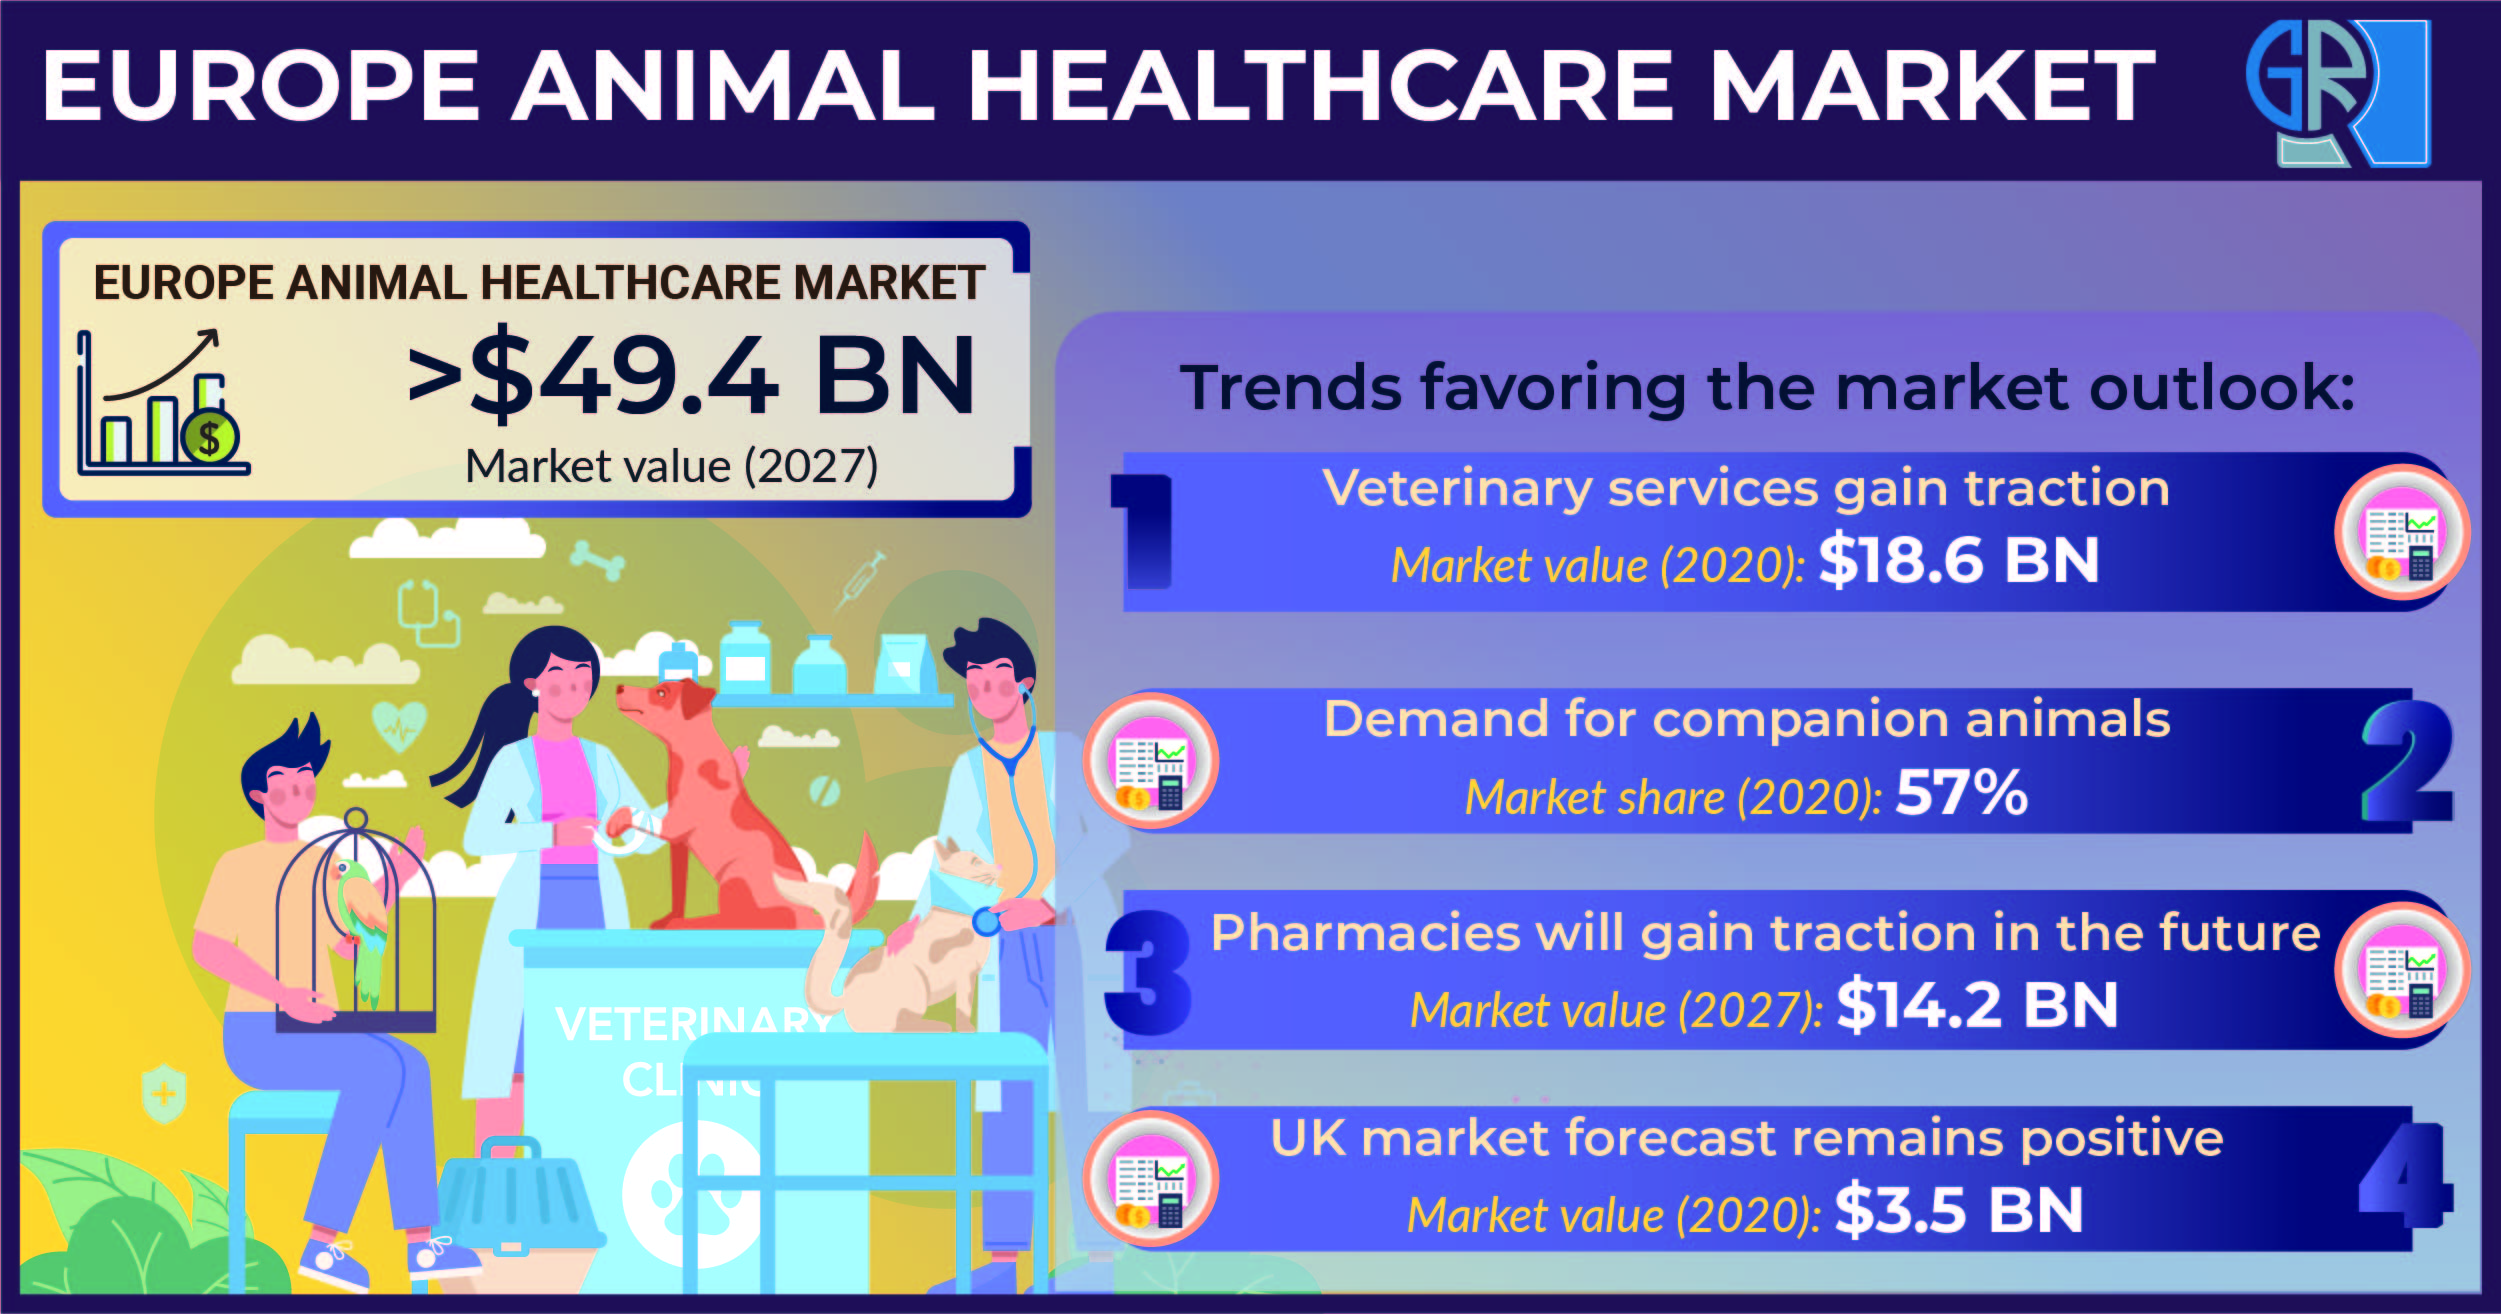 Europe Animal Healthcare Market revenue to surpass $